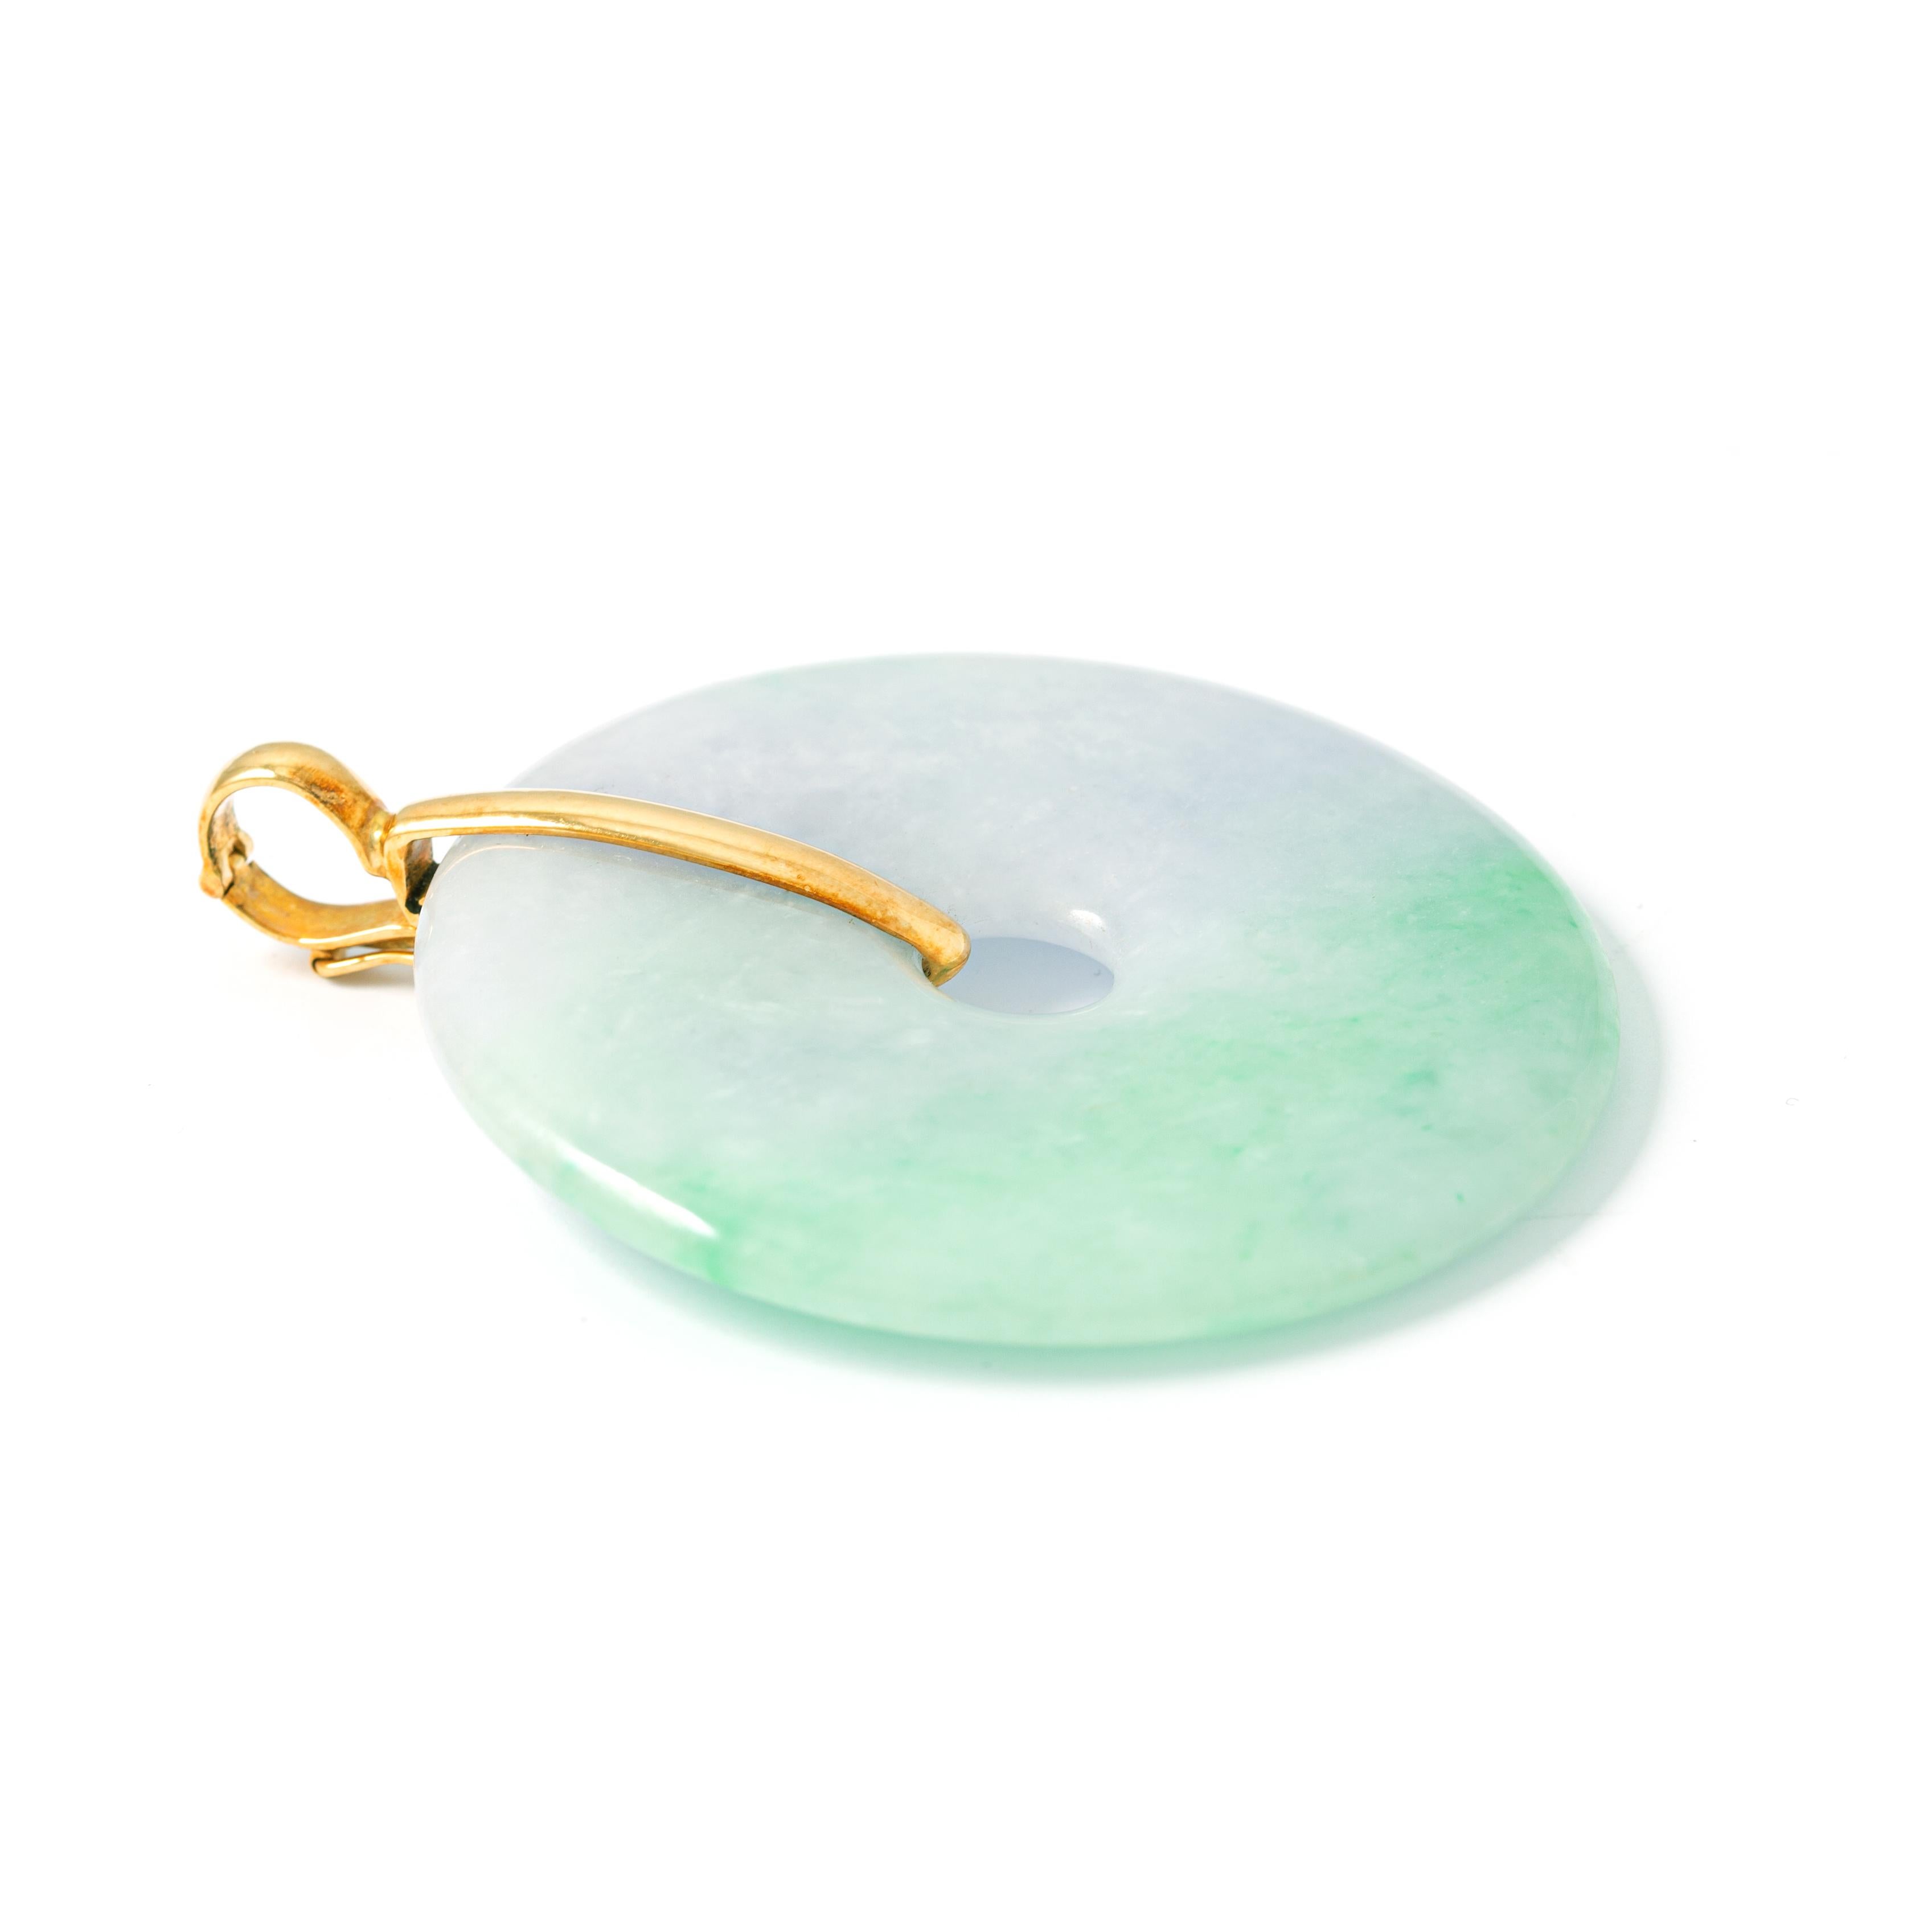 18K yellow gold pendant holding a jade. 
Length: 6.70 cm. 
Gross weight: 43.40 grams.
